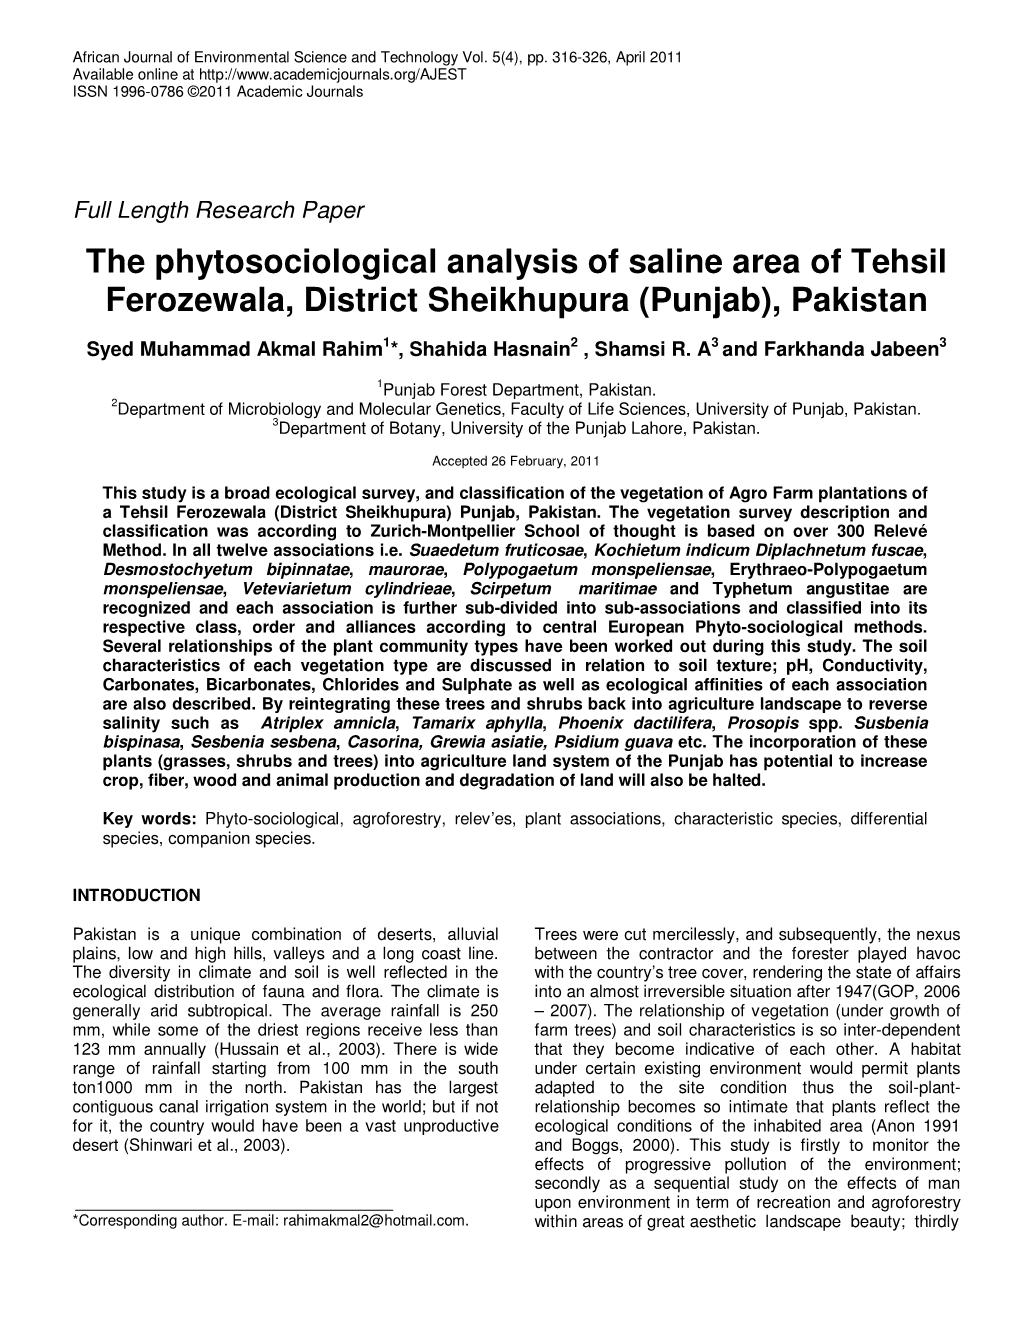 The Phytosociological Analysis of Saline Area of Tehsil Ferozewala, District Sheikhupura (Punjab), Pakistan